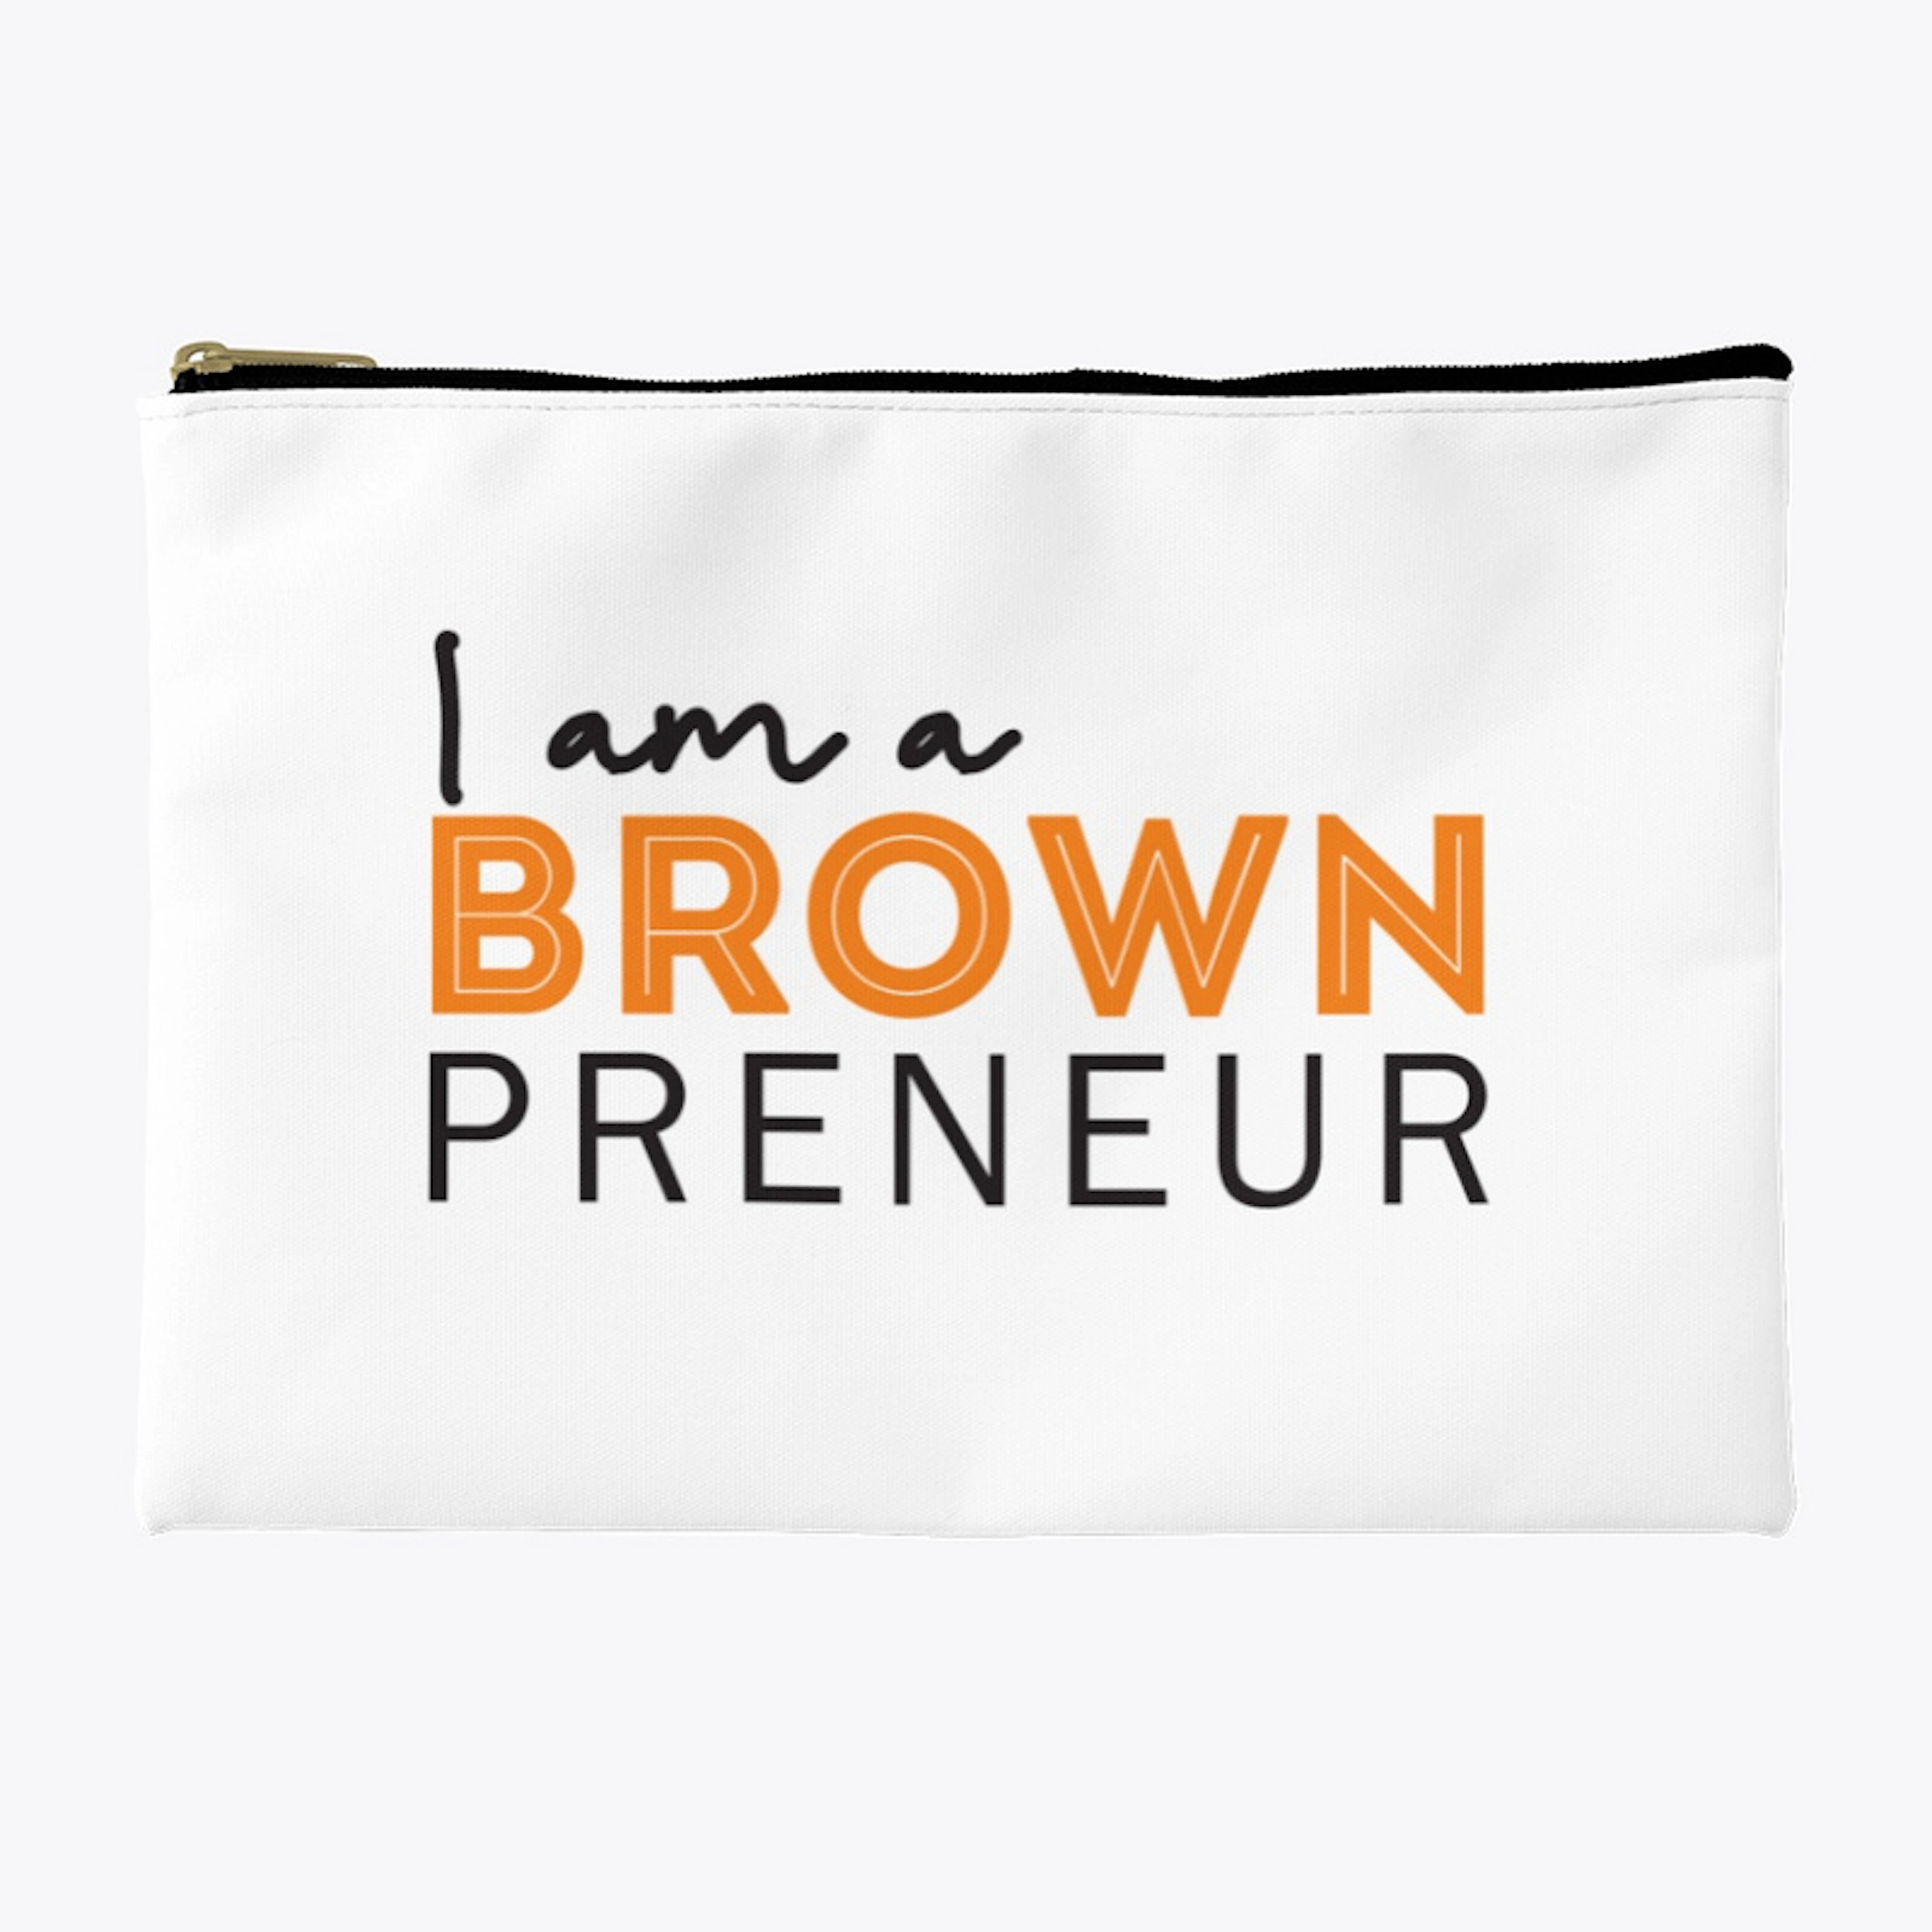 I am a Brownpreneur!